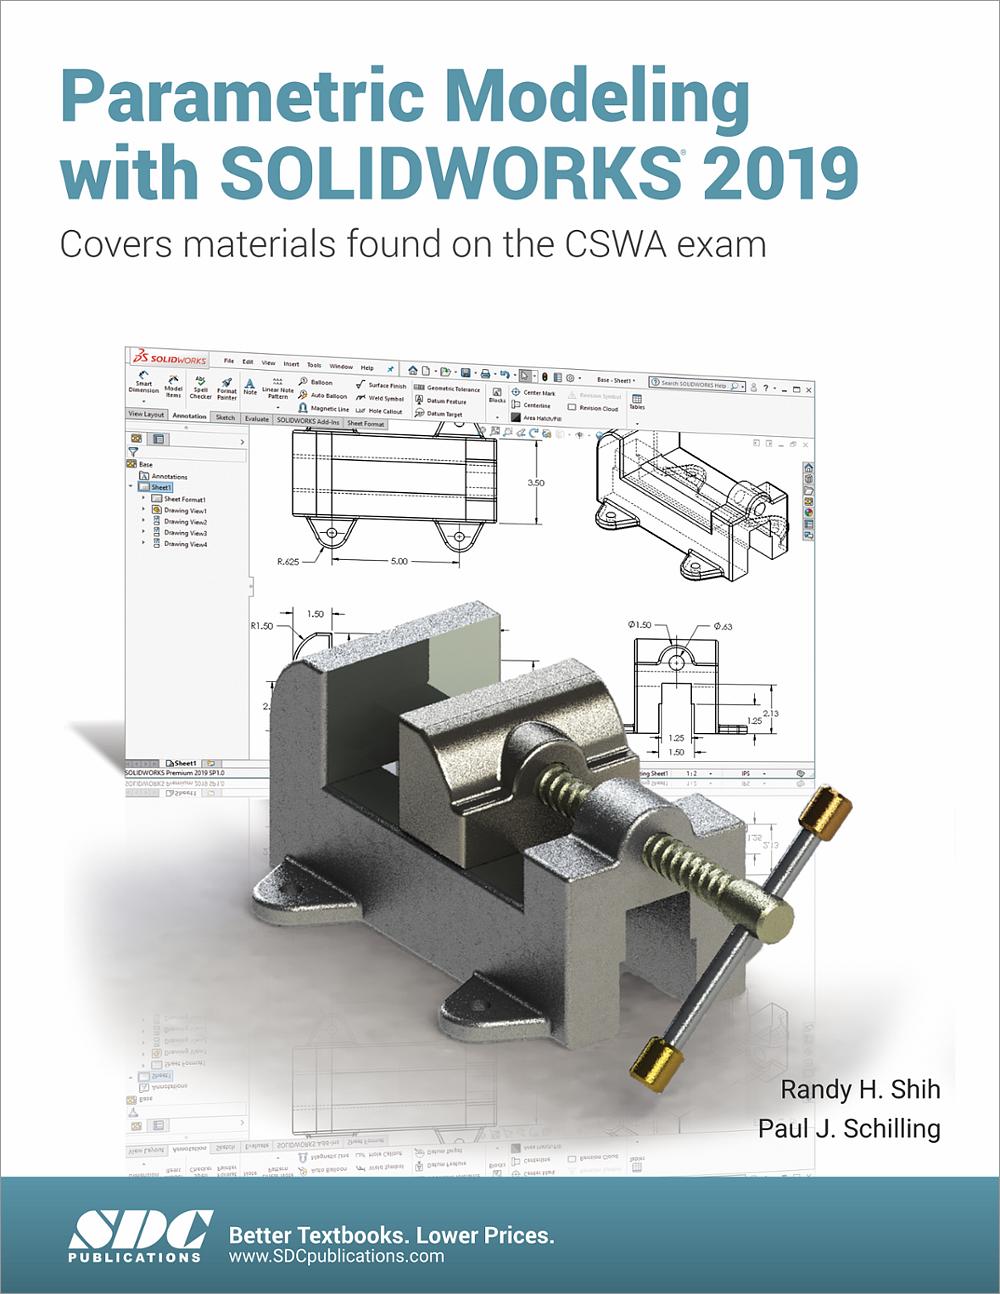 solidworks 2019 book pdf free download